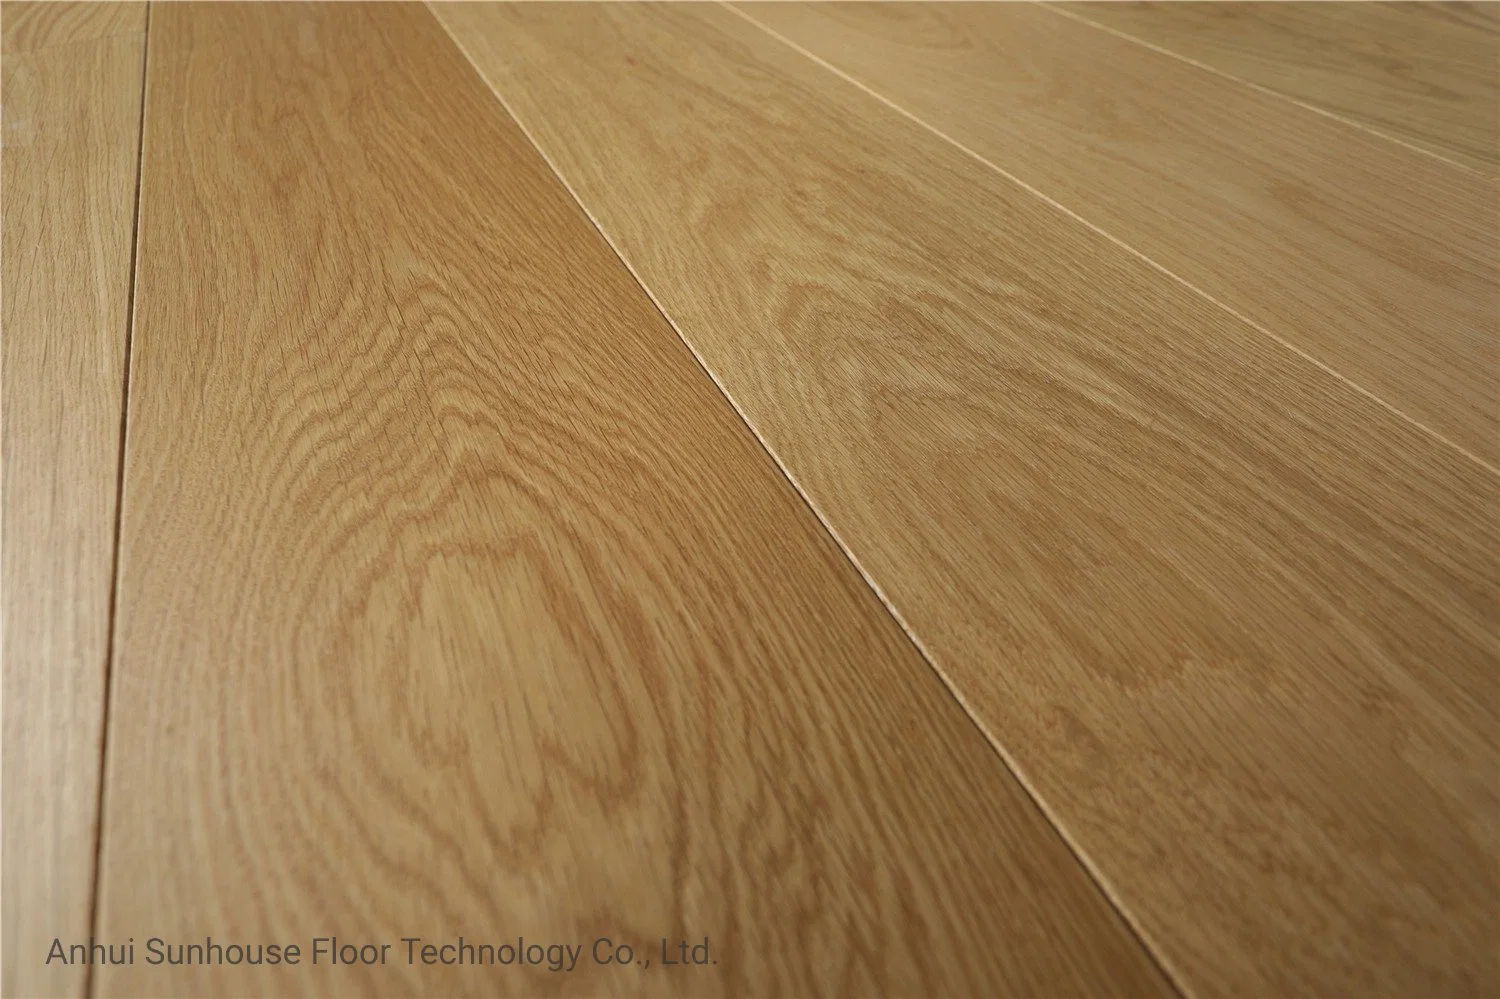 Natural Oiled Oak Wood Veneer Parquet Flooring Hardwood Solid Engineered Wooden Floor